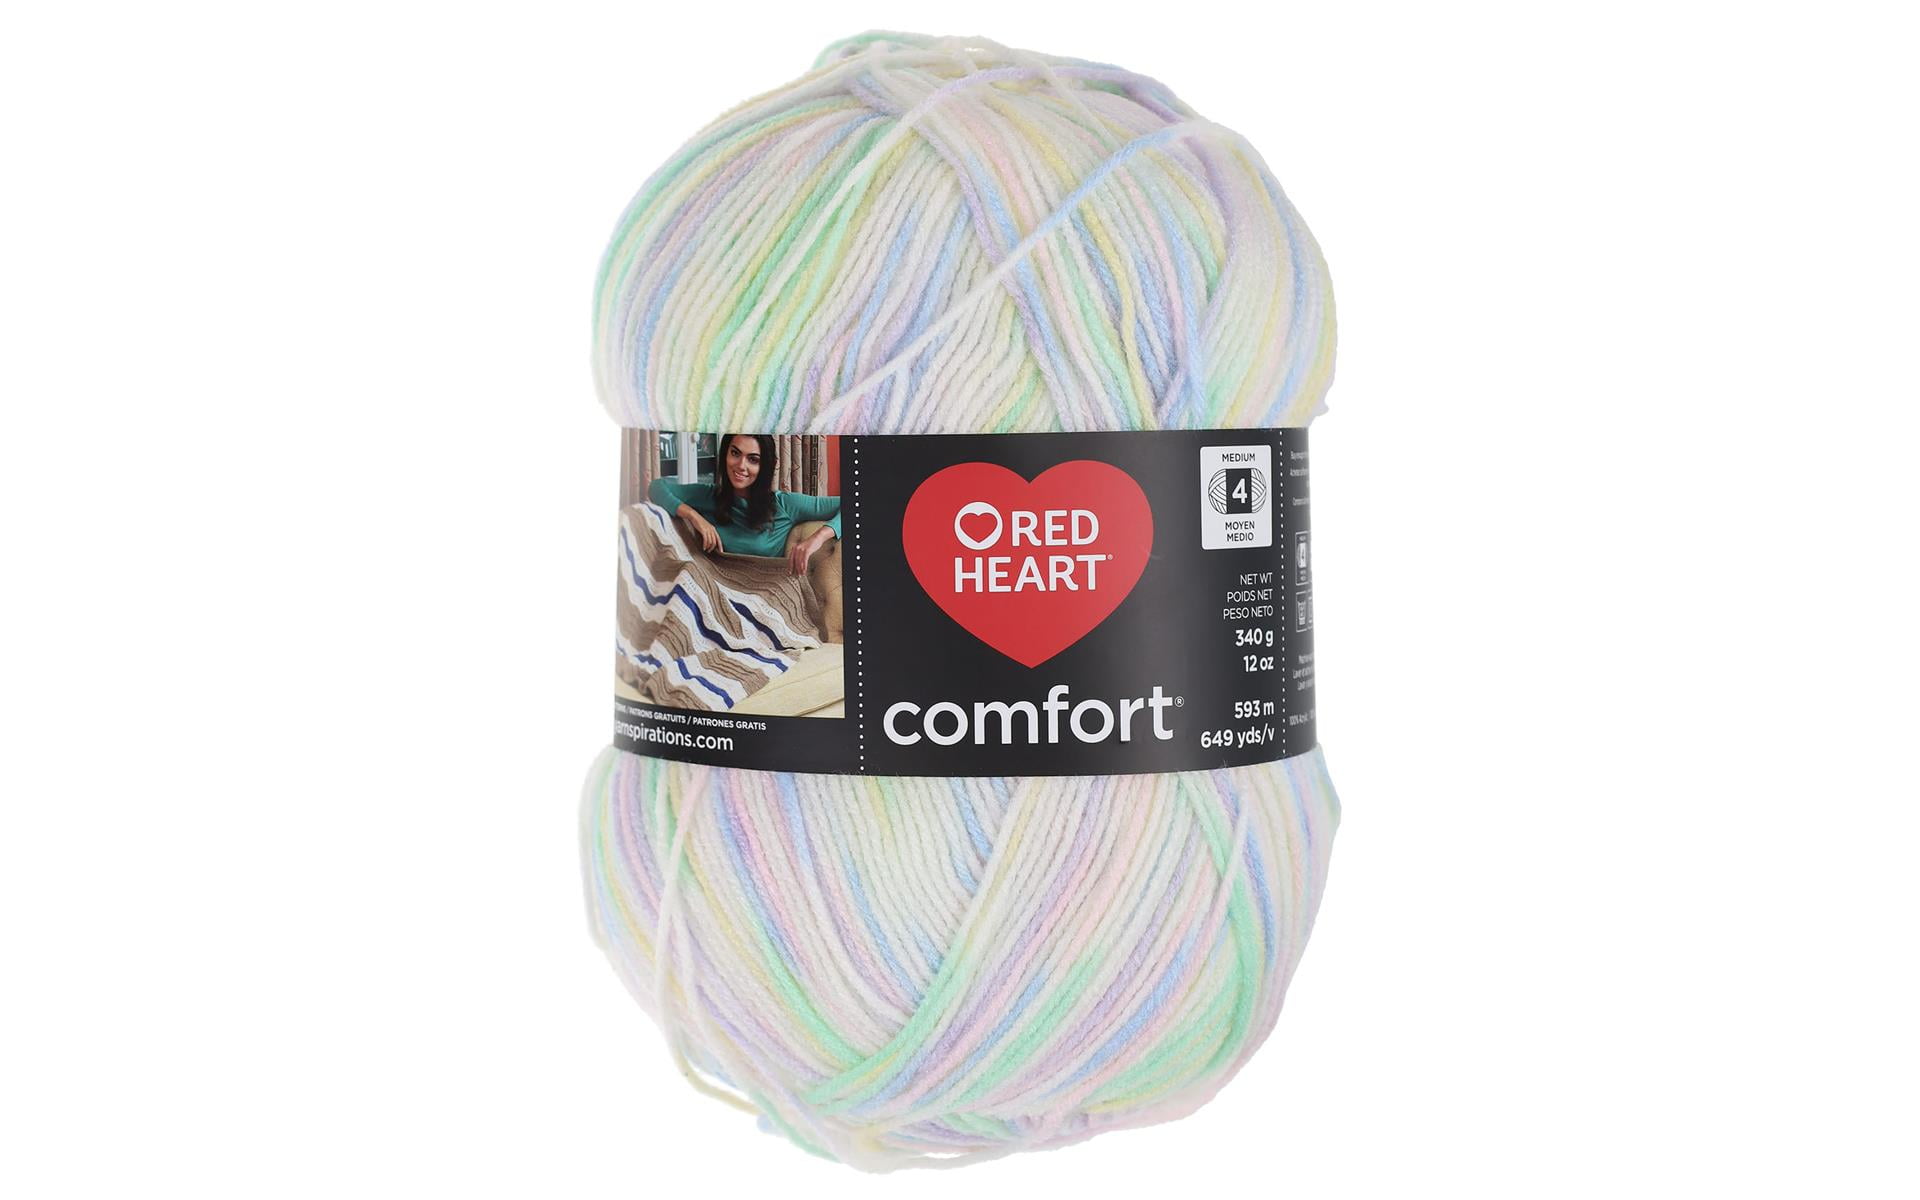 Red Heart Comfort Shades of Tan Yarn - 1 Pack of 16oz/454g - Acrylic - 4  Medium (Worsted) - 867 Yards - Knitting/Crochet